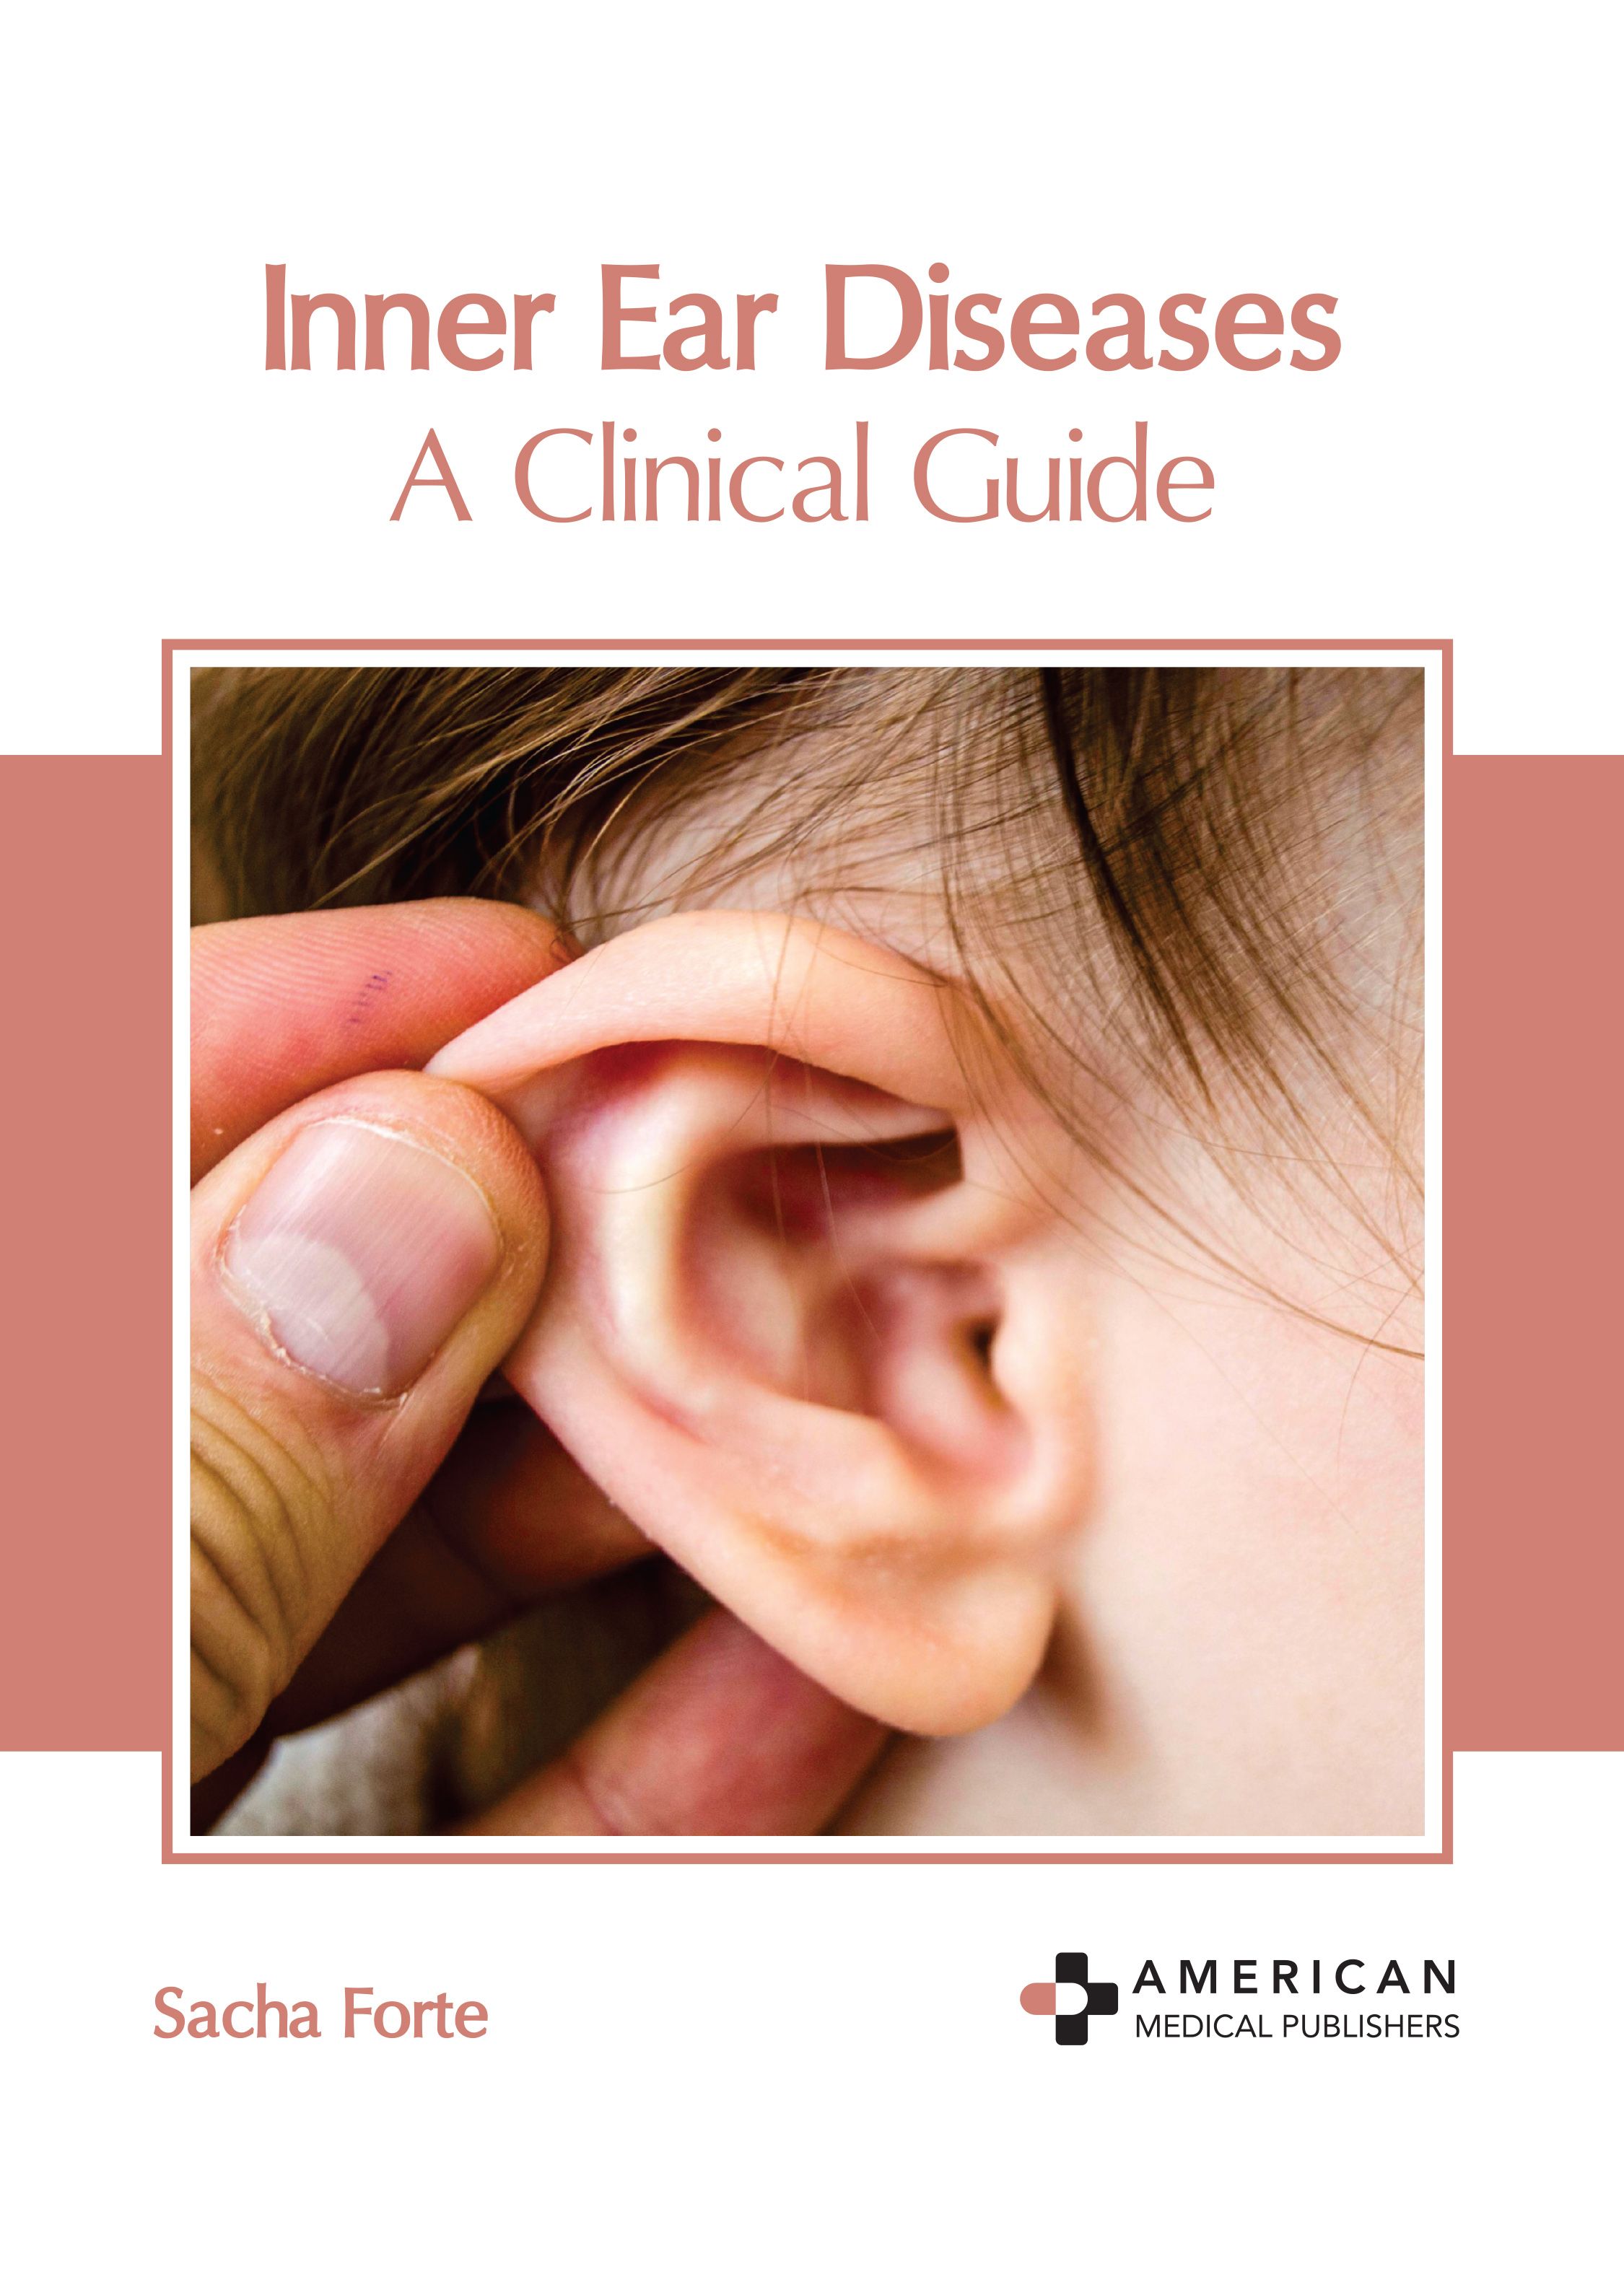 INNER EAR DISEASES: A CLINICAL GUIDE